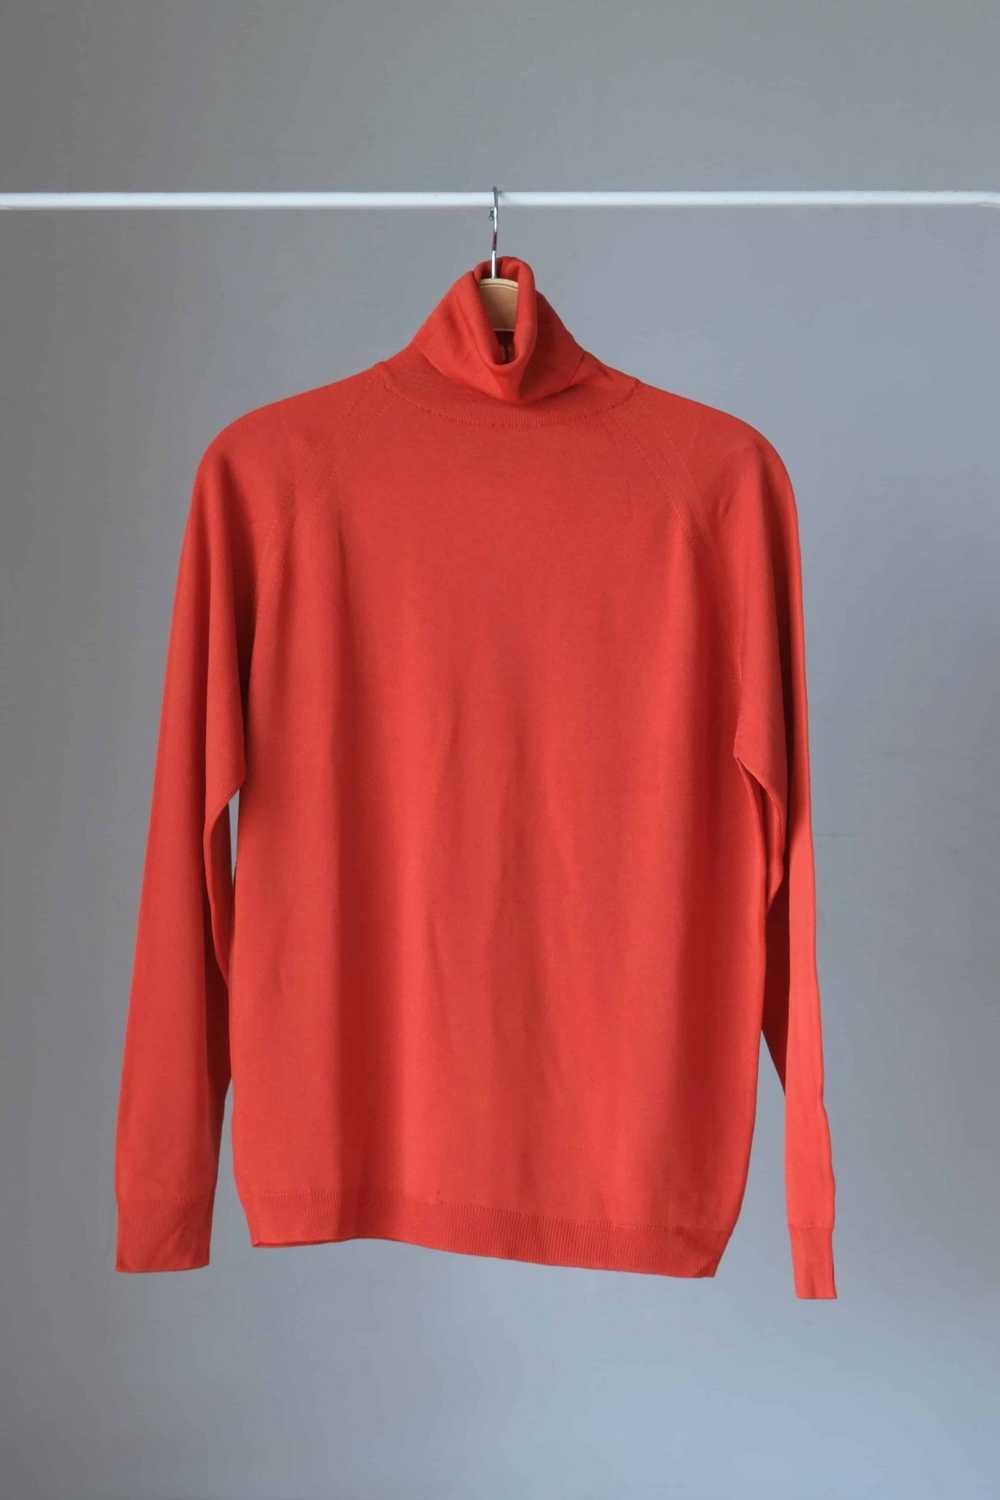 MORLEY 70's Turtleneck Sweater - image 3